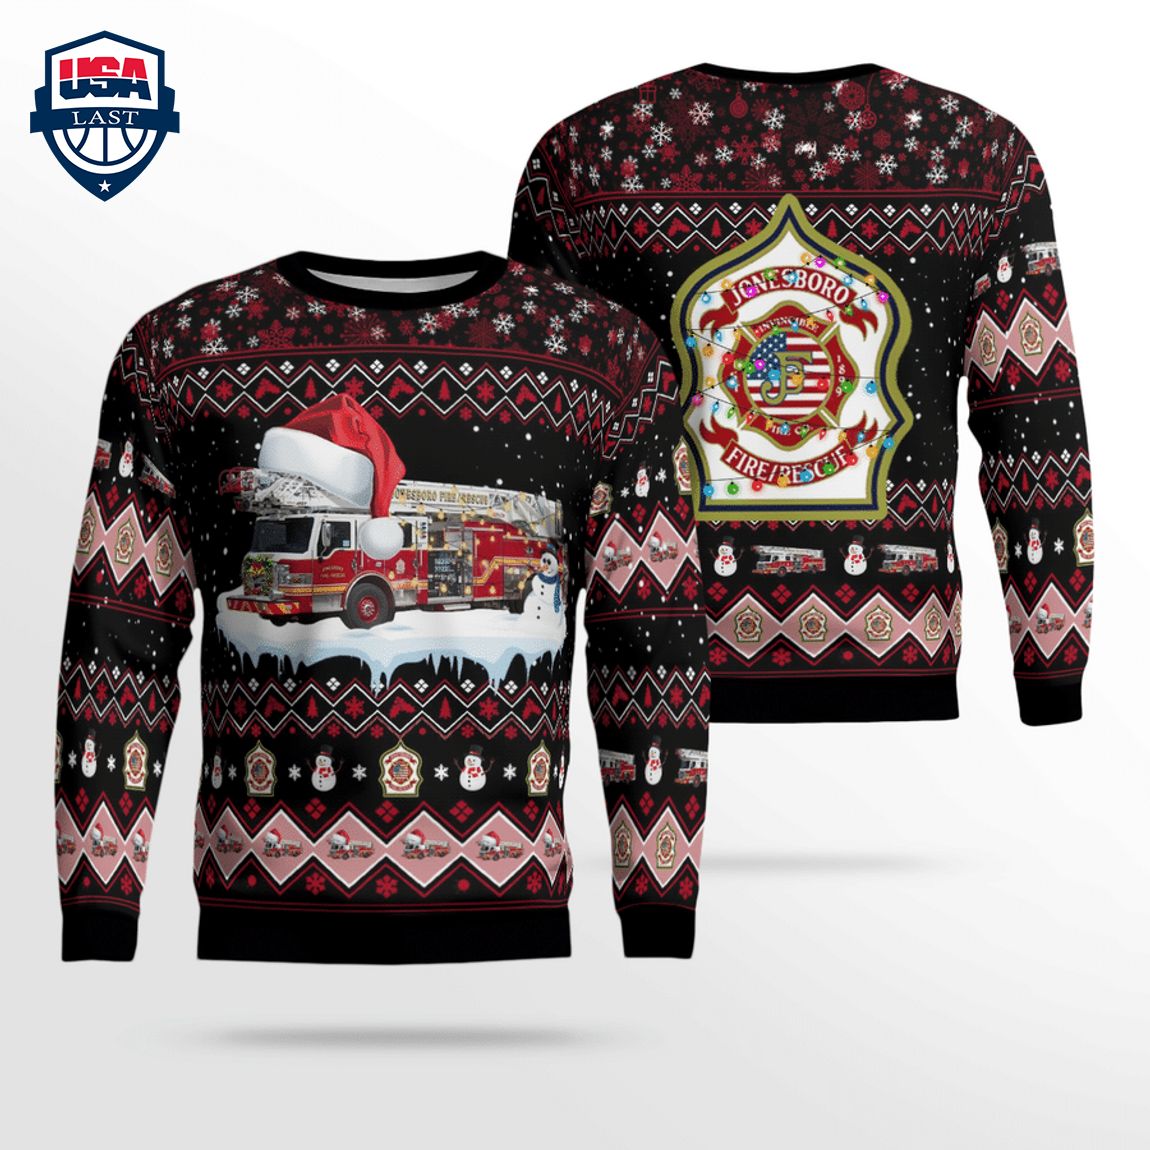 Arkansas Jonesboro Fire Department 3D Christmas Sweater - Nice photo dude